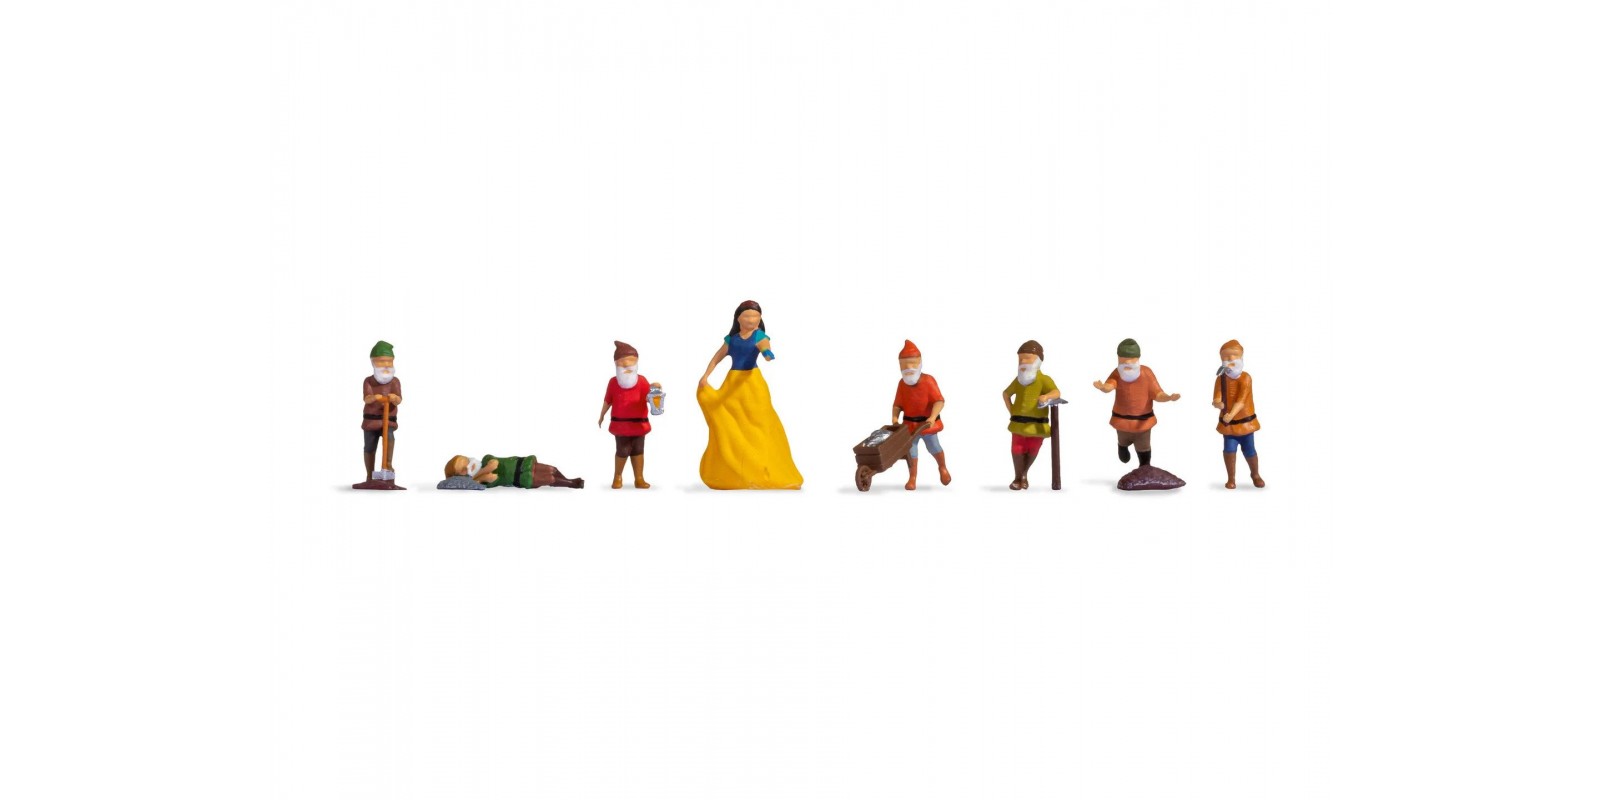 NO15803 Snow White and the Seven Dwarfs